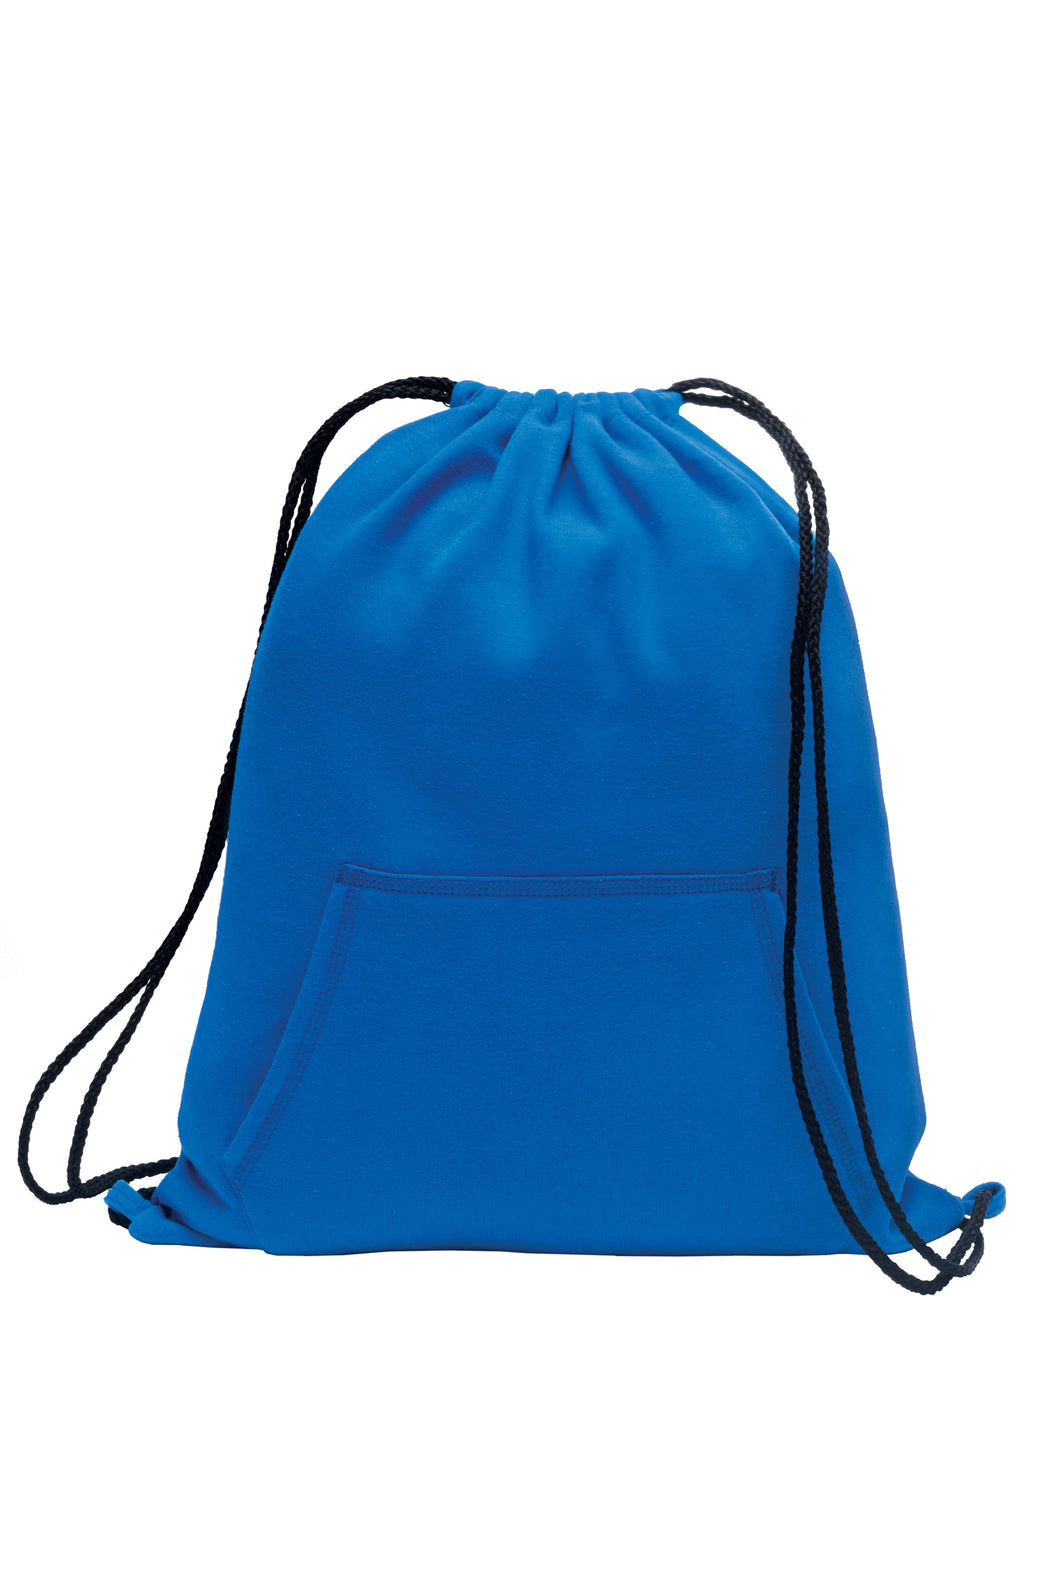 NCS Cinch Bag